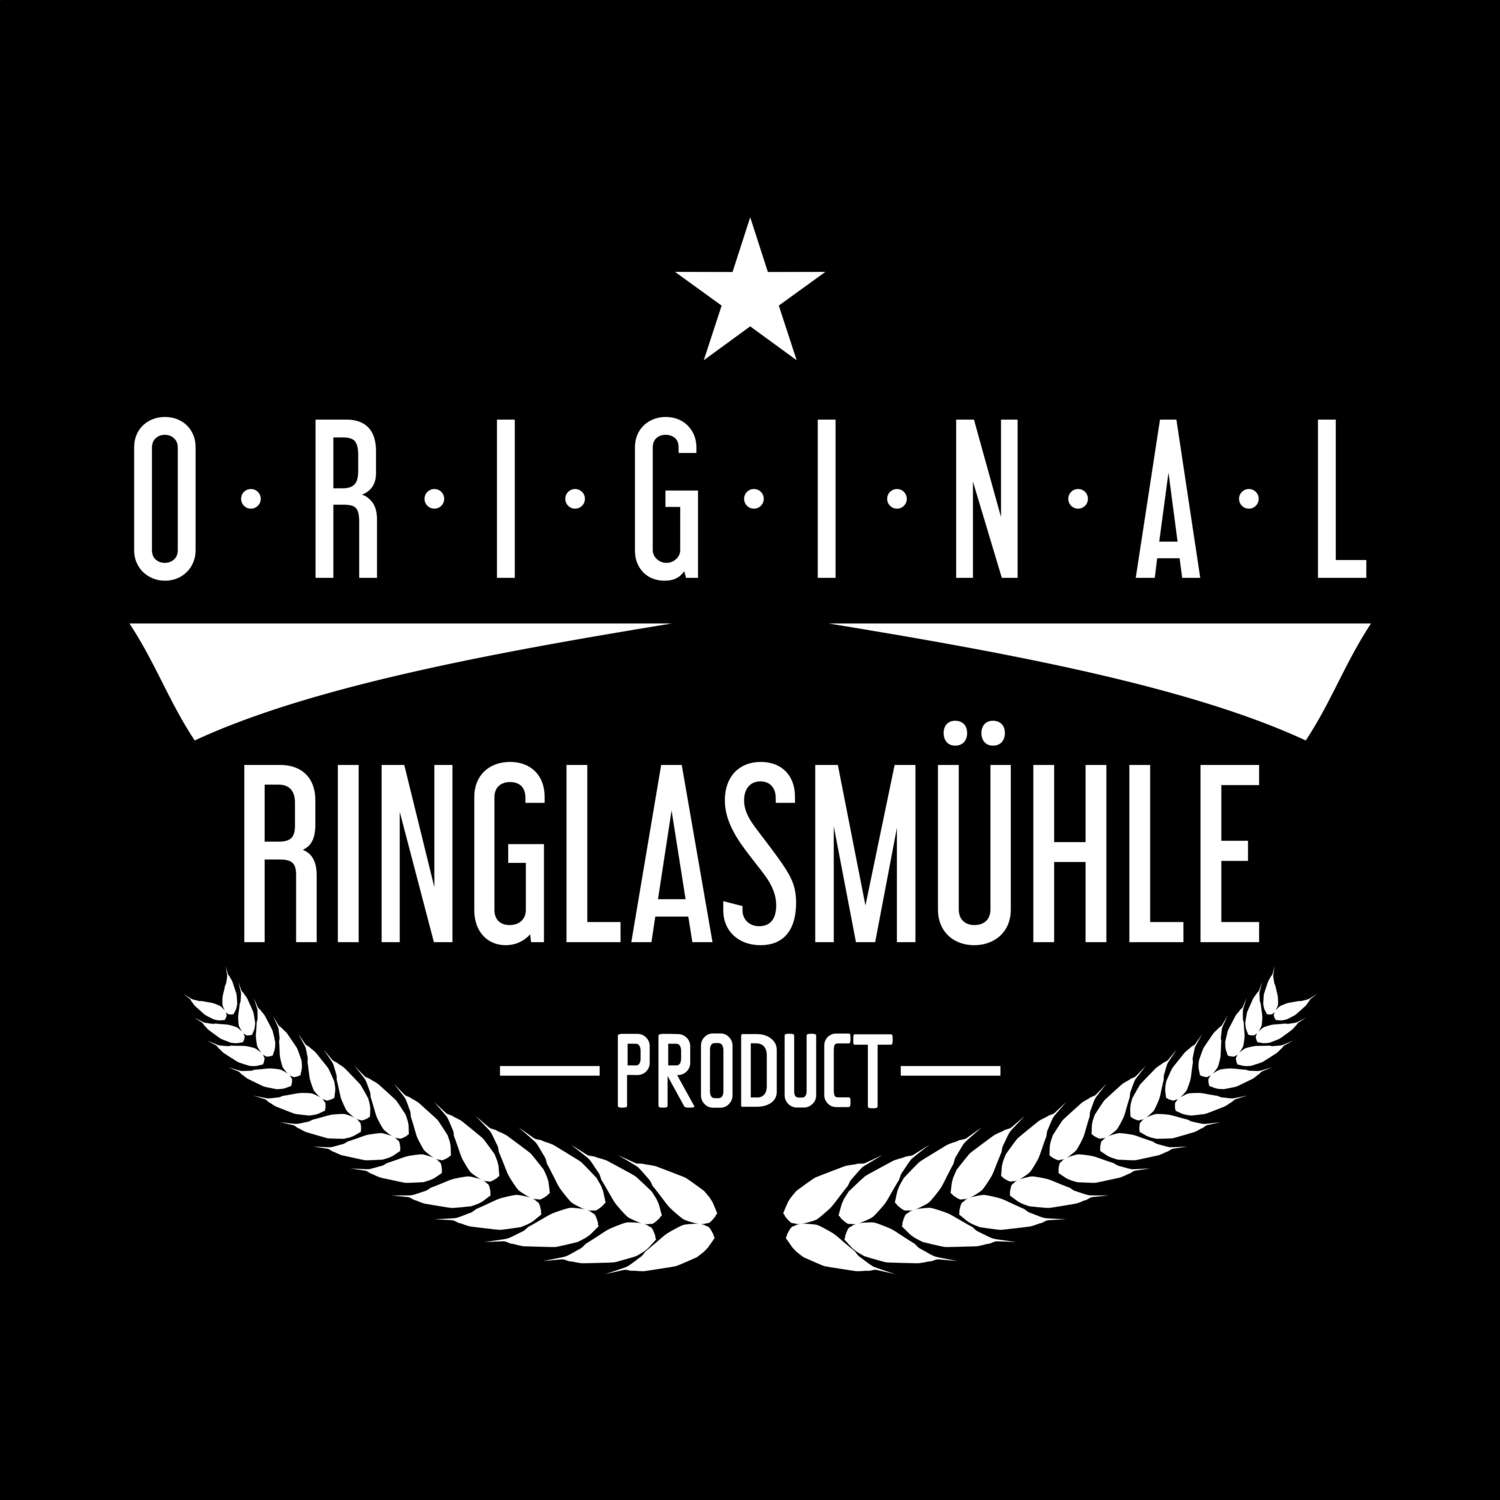 Ringlasmühle T-Shirt »Original Product«